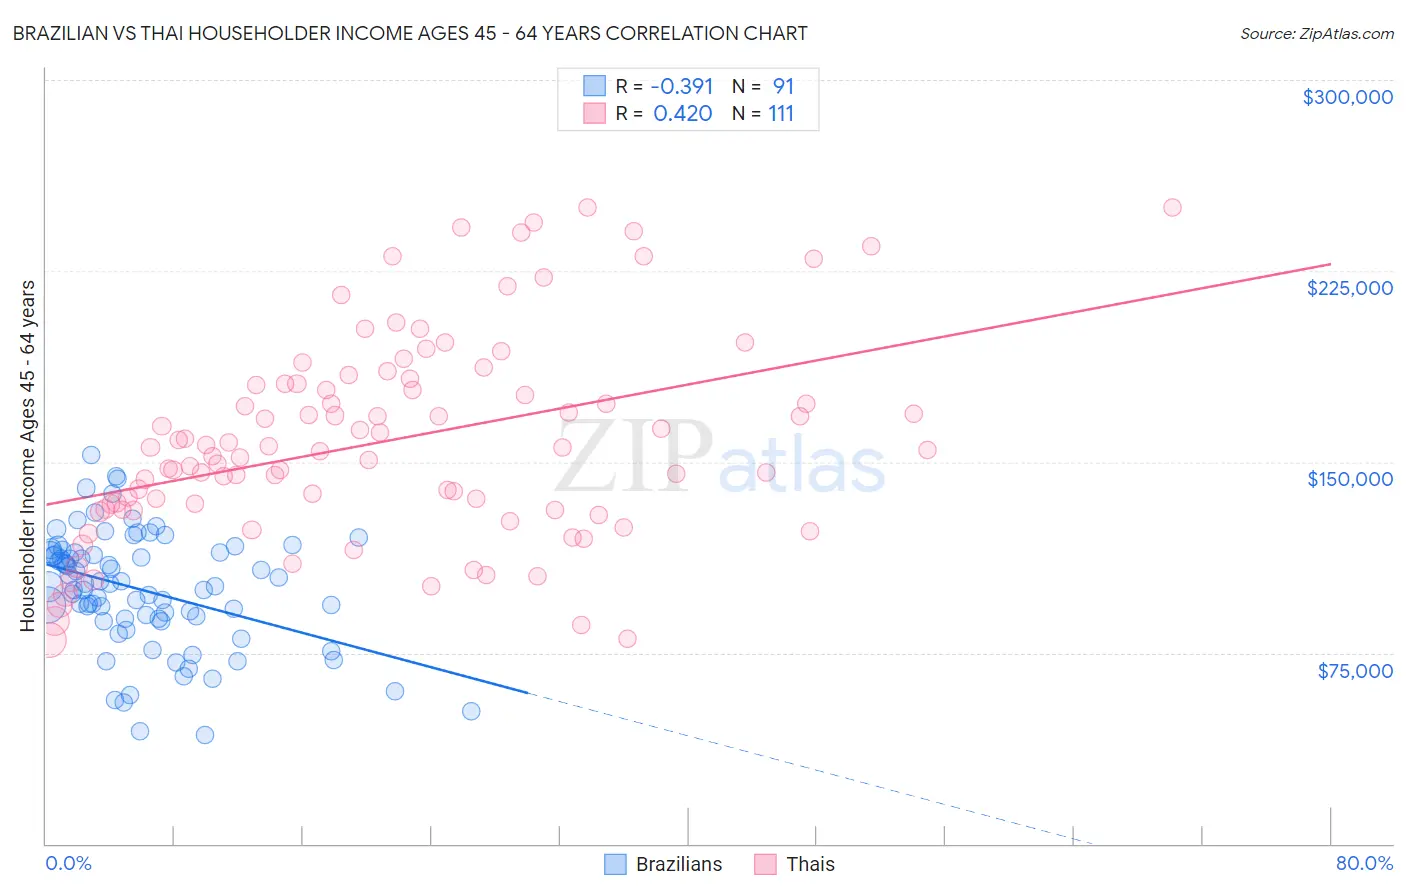 Brazilian vs Thai Householder Income Ages 45 - 64 years